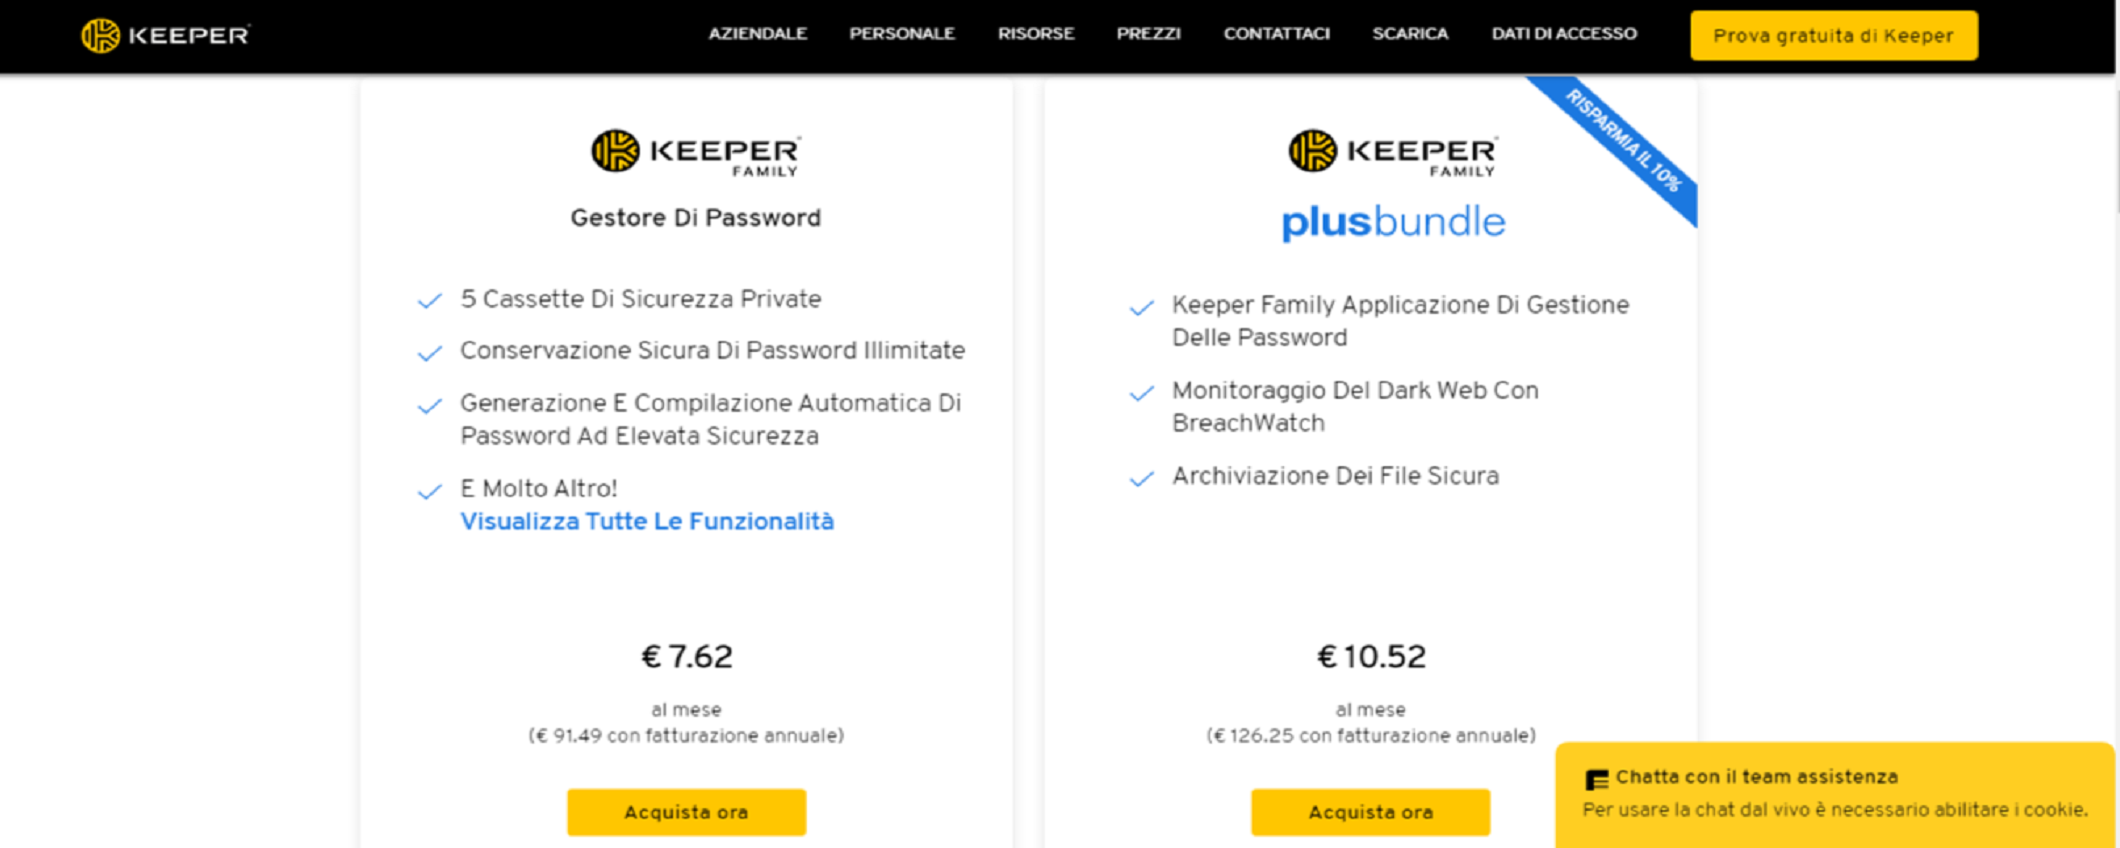 Keeper family Plus bundle: sconto del 10%!